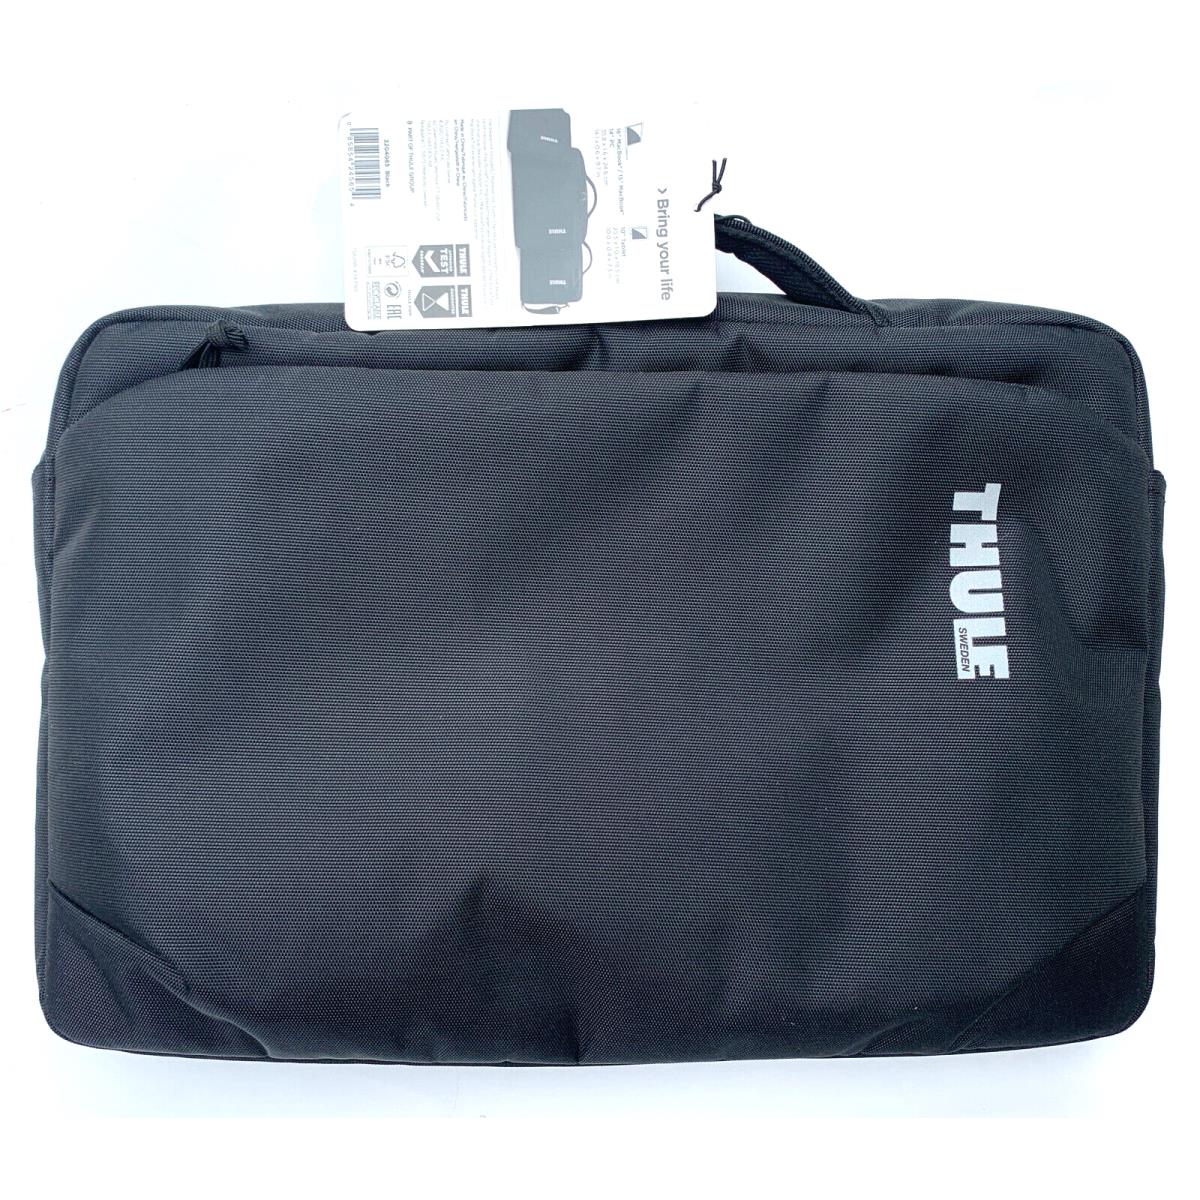 Thule Subterra Macbook Attach 15 Black Storage Travel Bag with Shoulder Strap